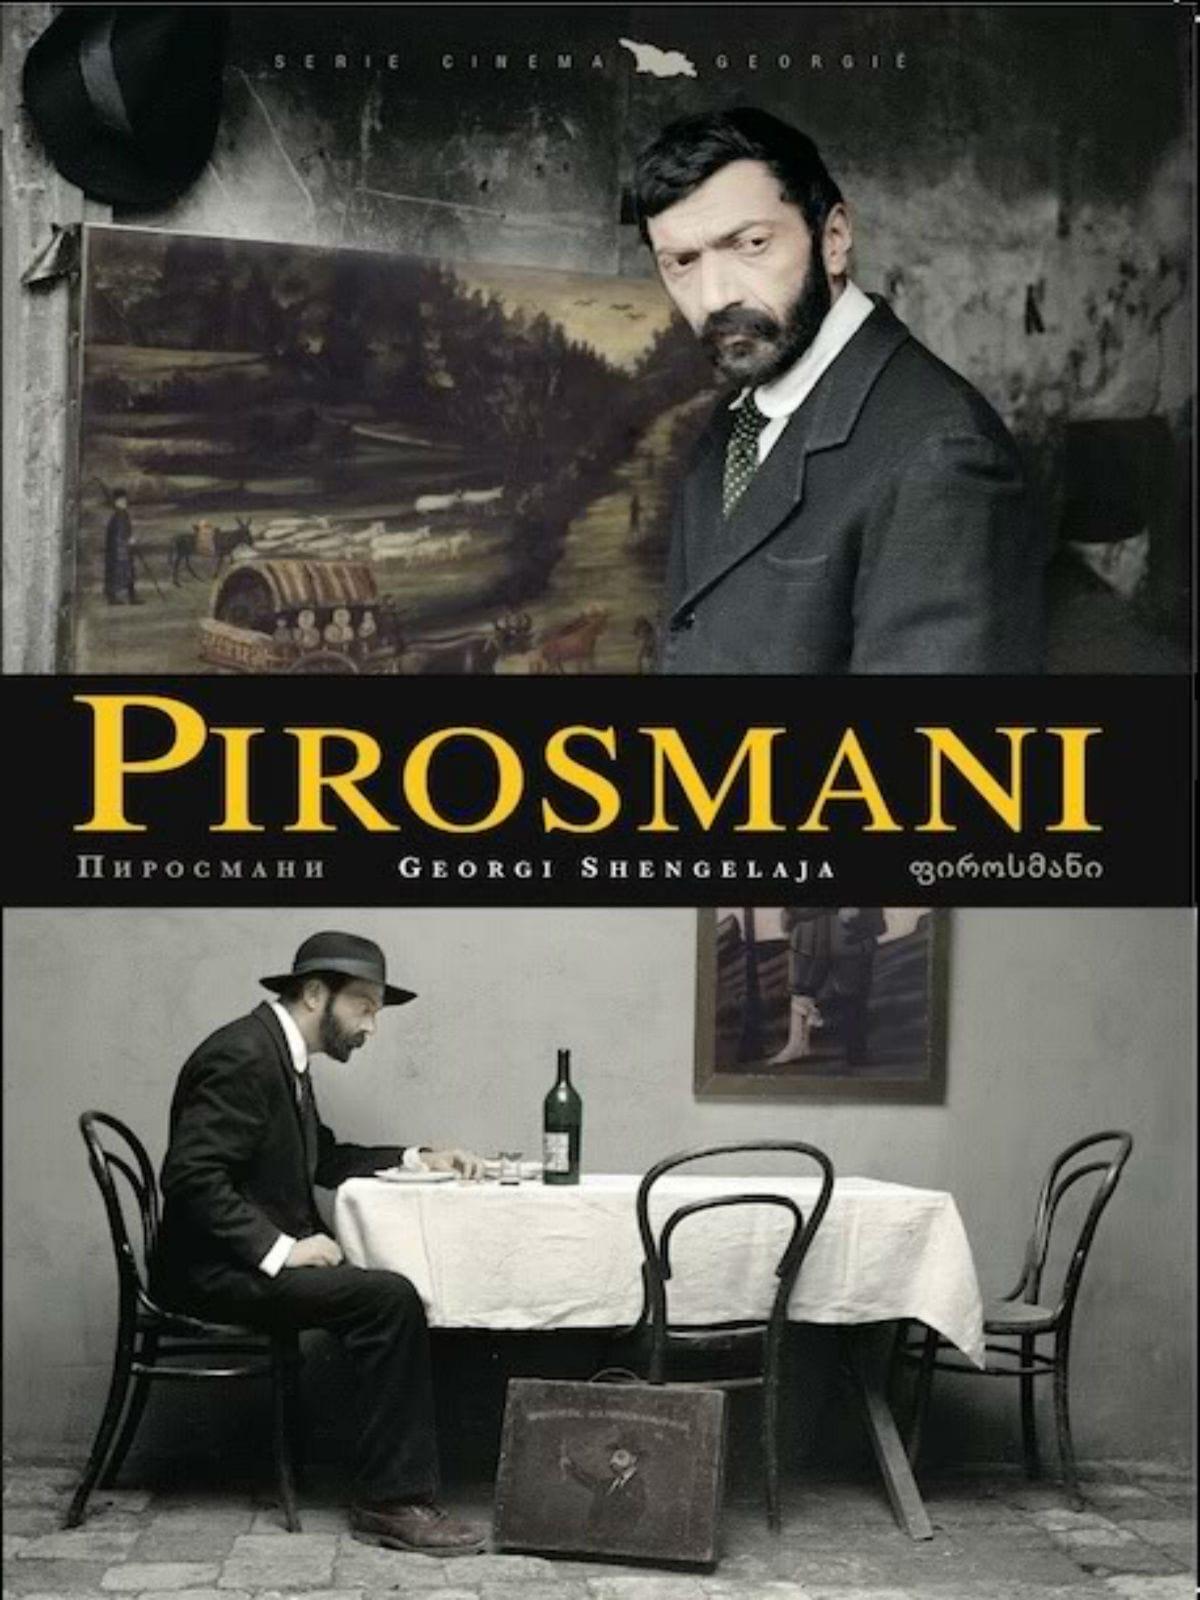 Pirosmani poster